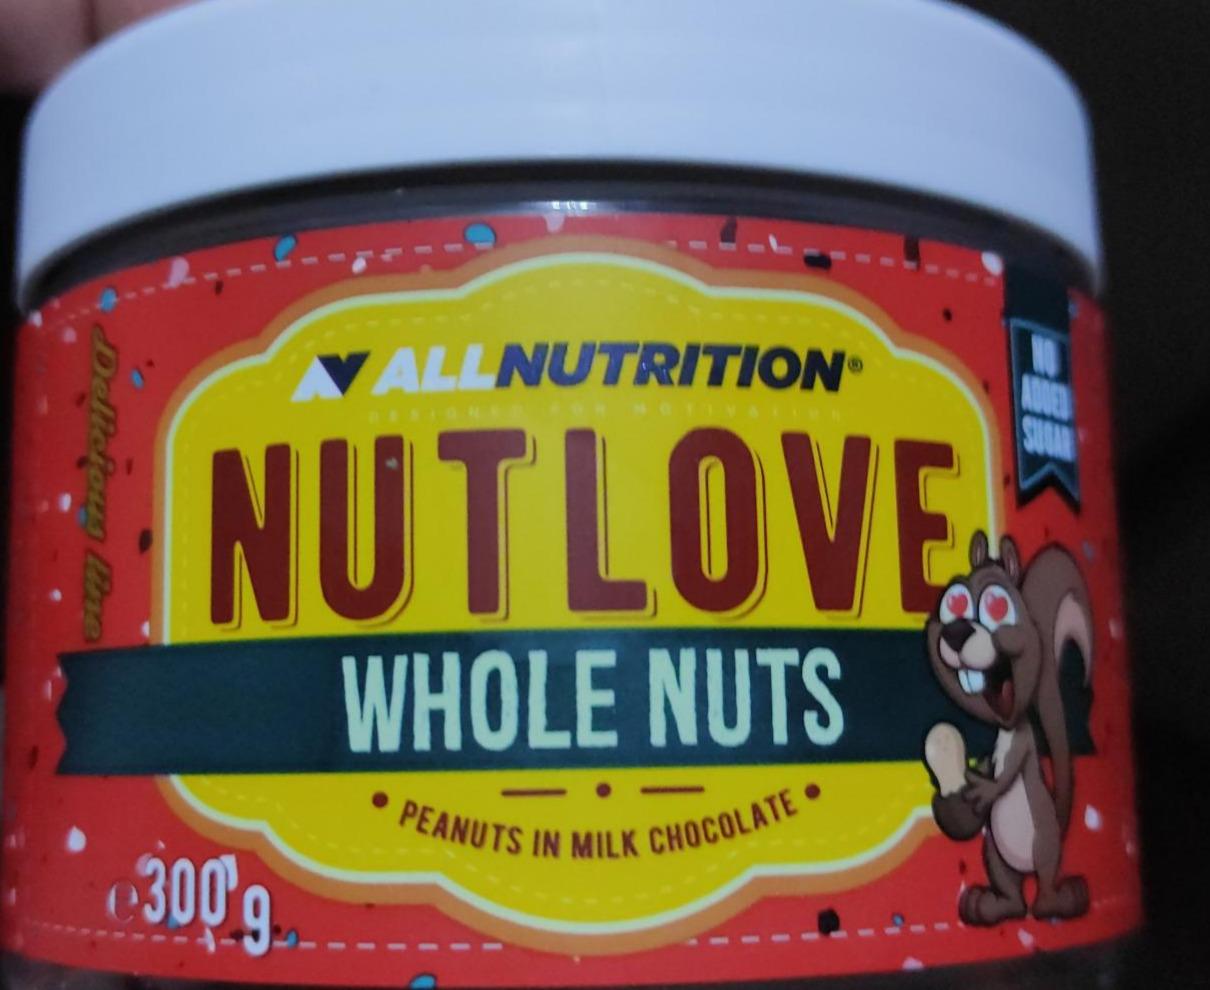 Zdjęcia - nutlove whole nuts Allnutrition